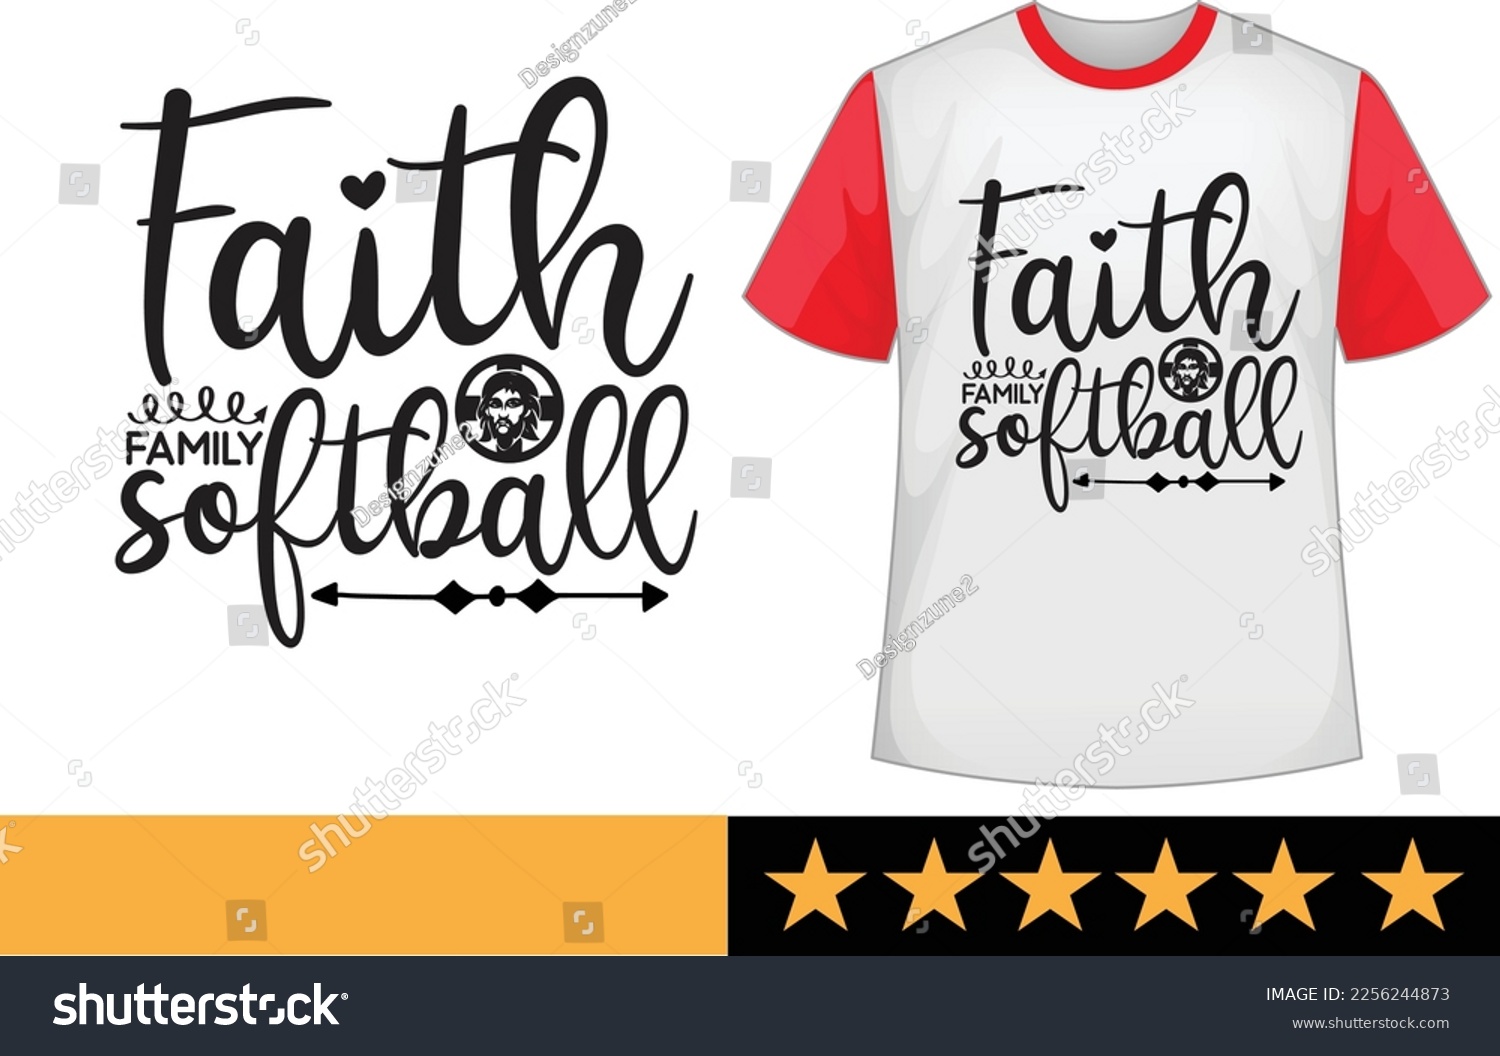 SVG of Faith family softball svg t shirt design svg